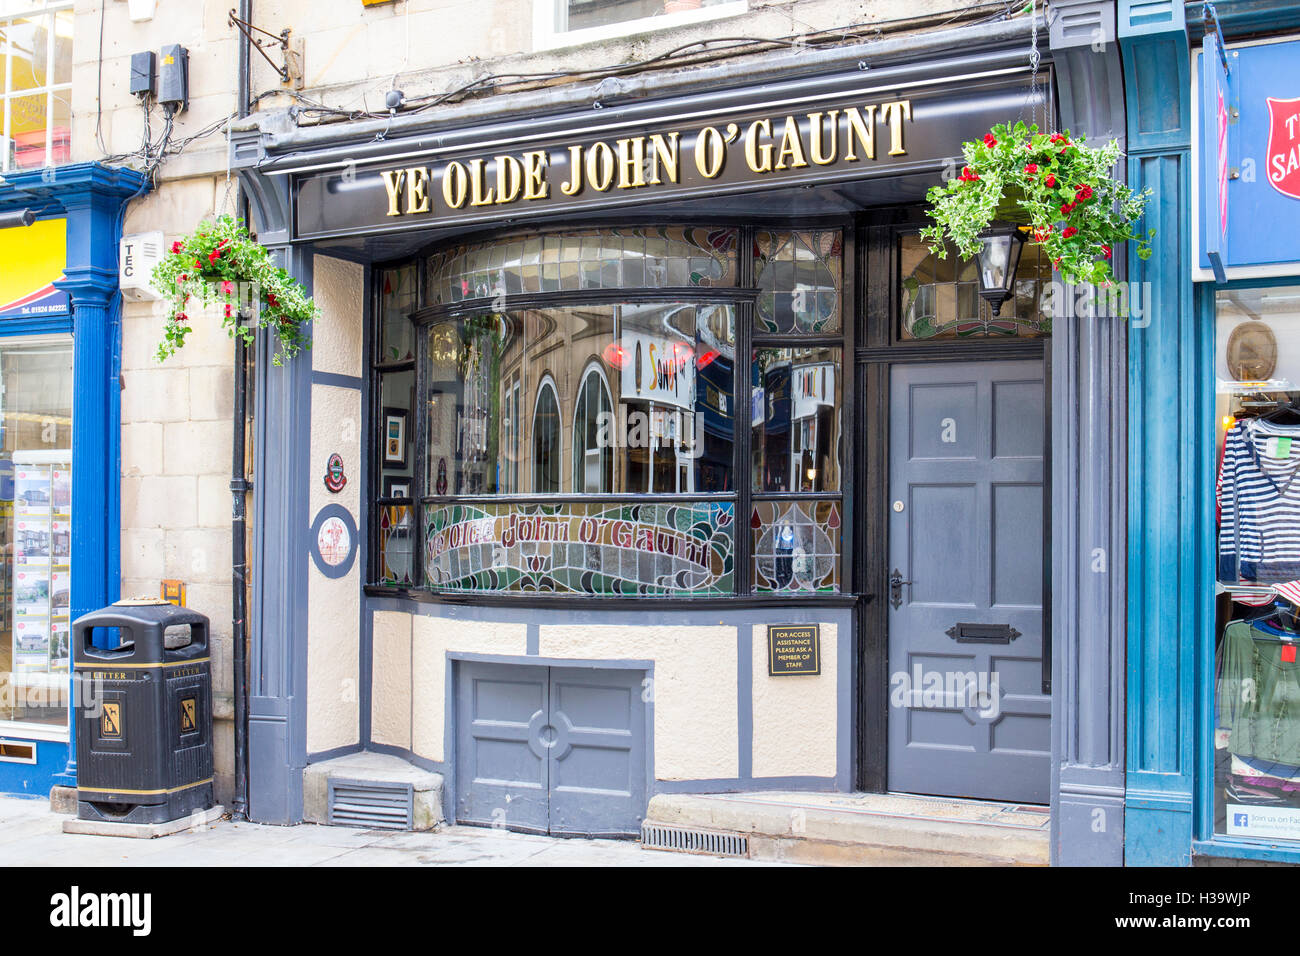 Ye Olde Jon o ' Gaunt Pub in Lancaster UK Stockfoto